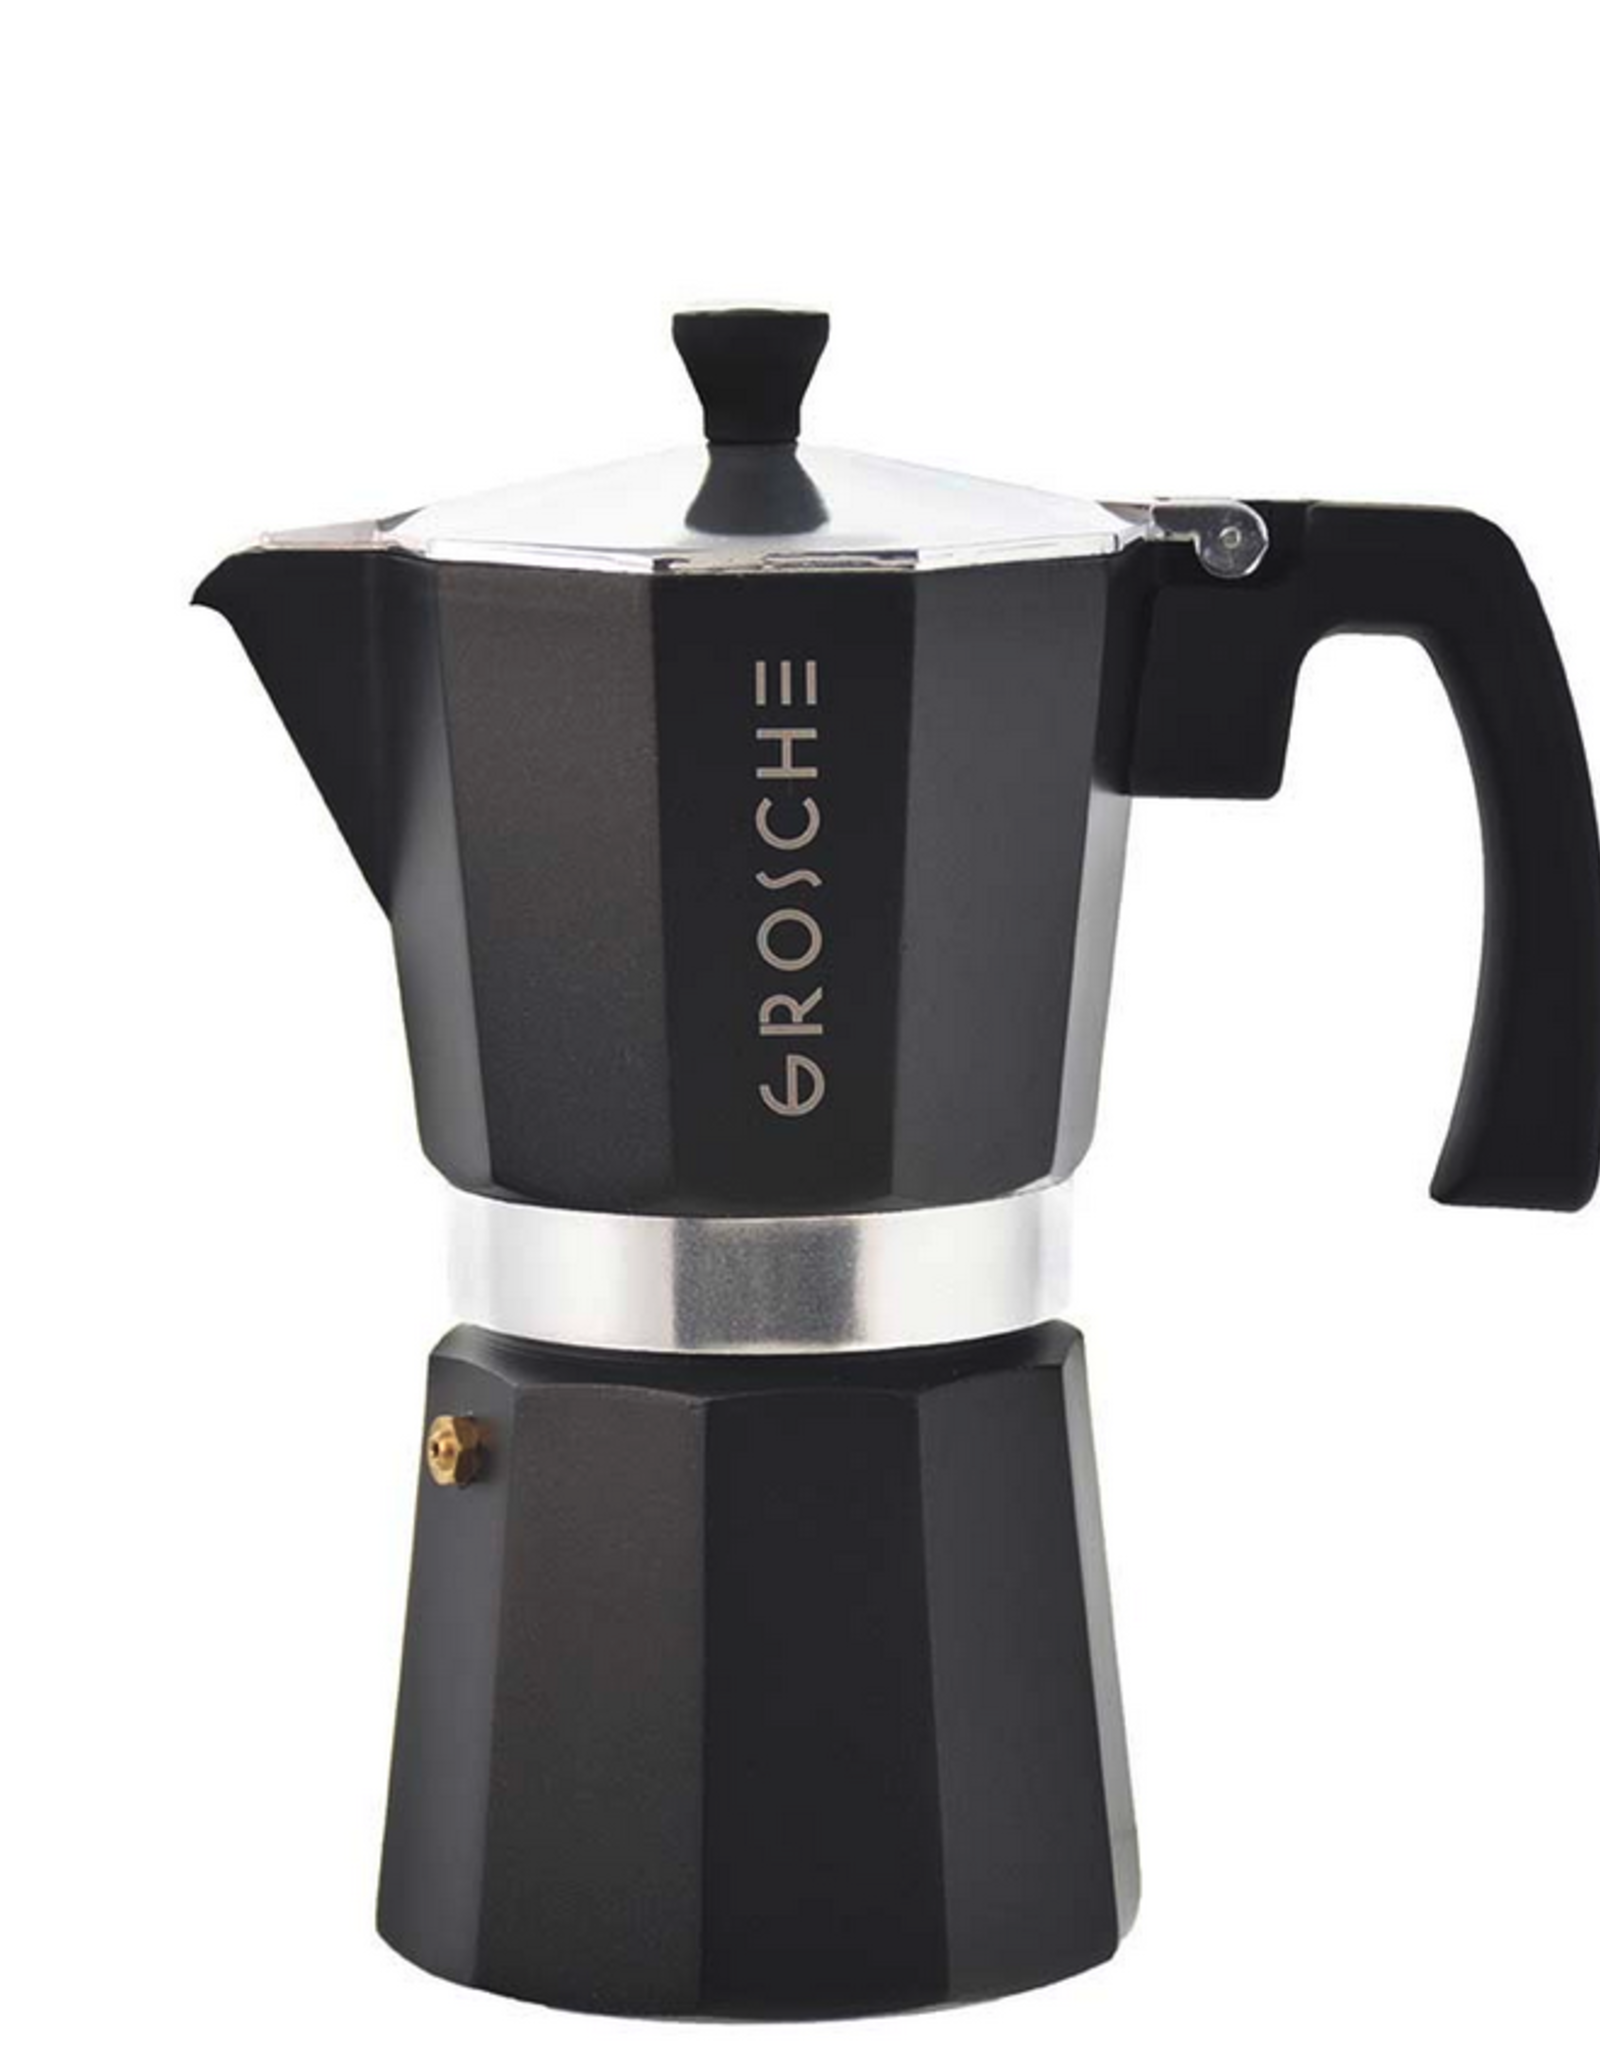 Charcoal Milano Stovetop Espresso Coffee Maker 6 cup